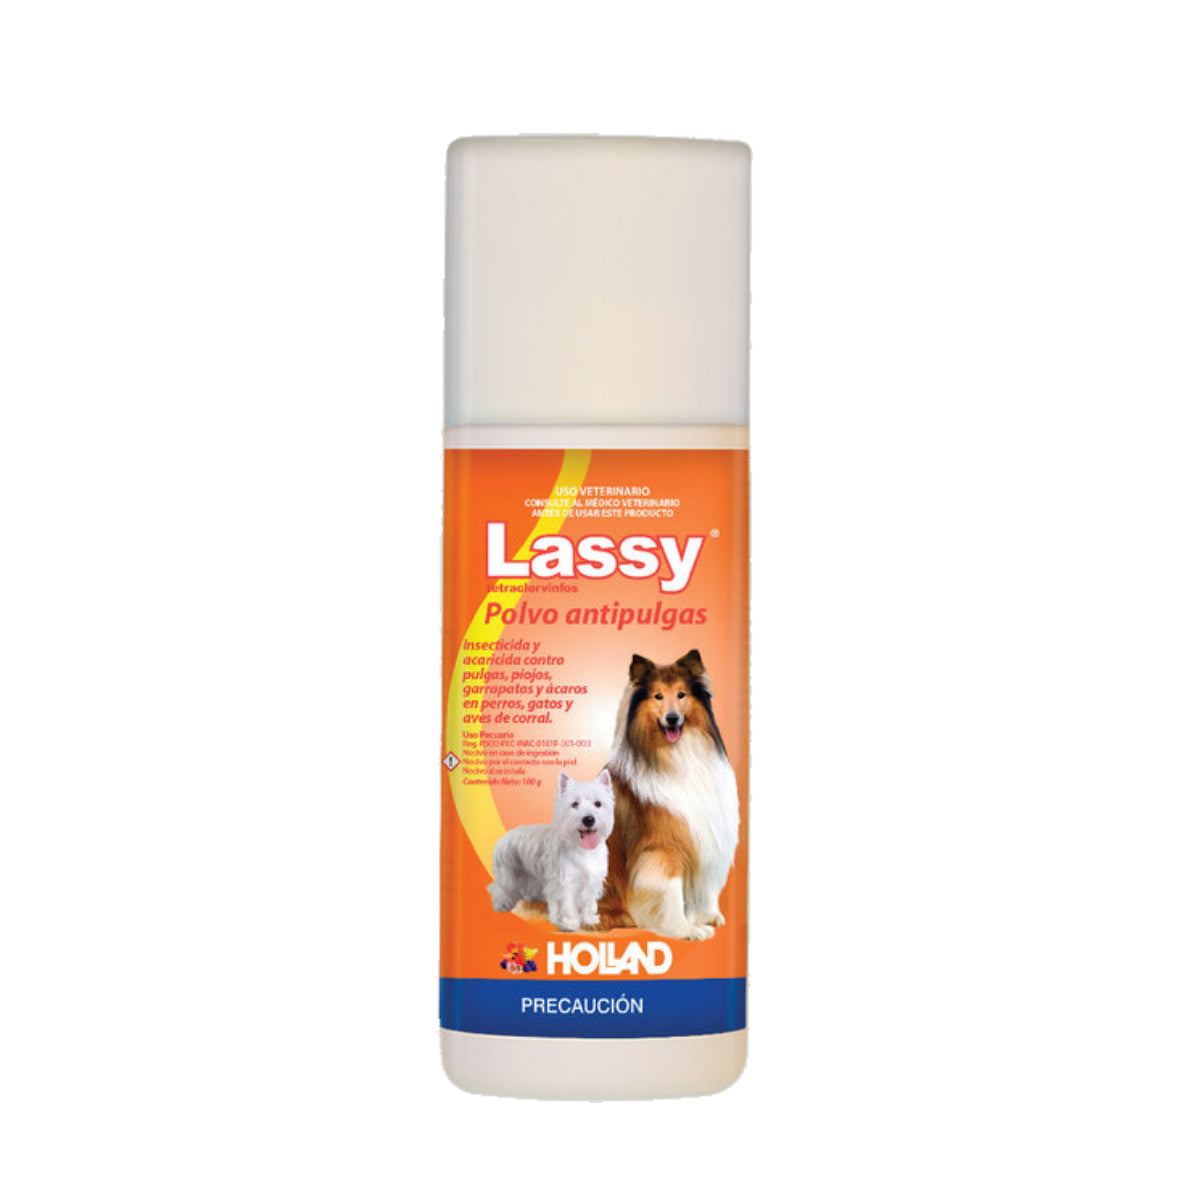 Polvo Antipulgas Lassy Holland 100 g